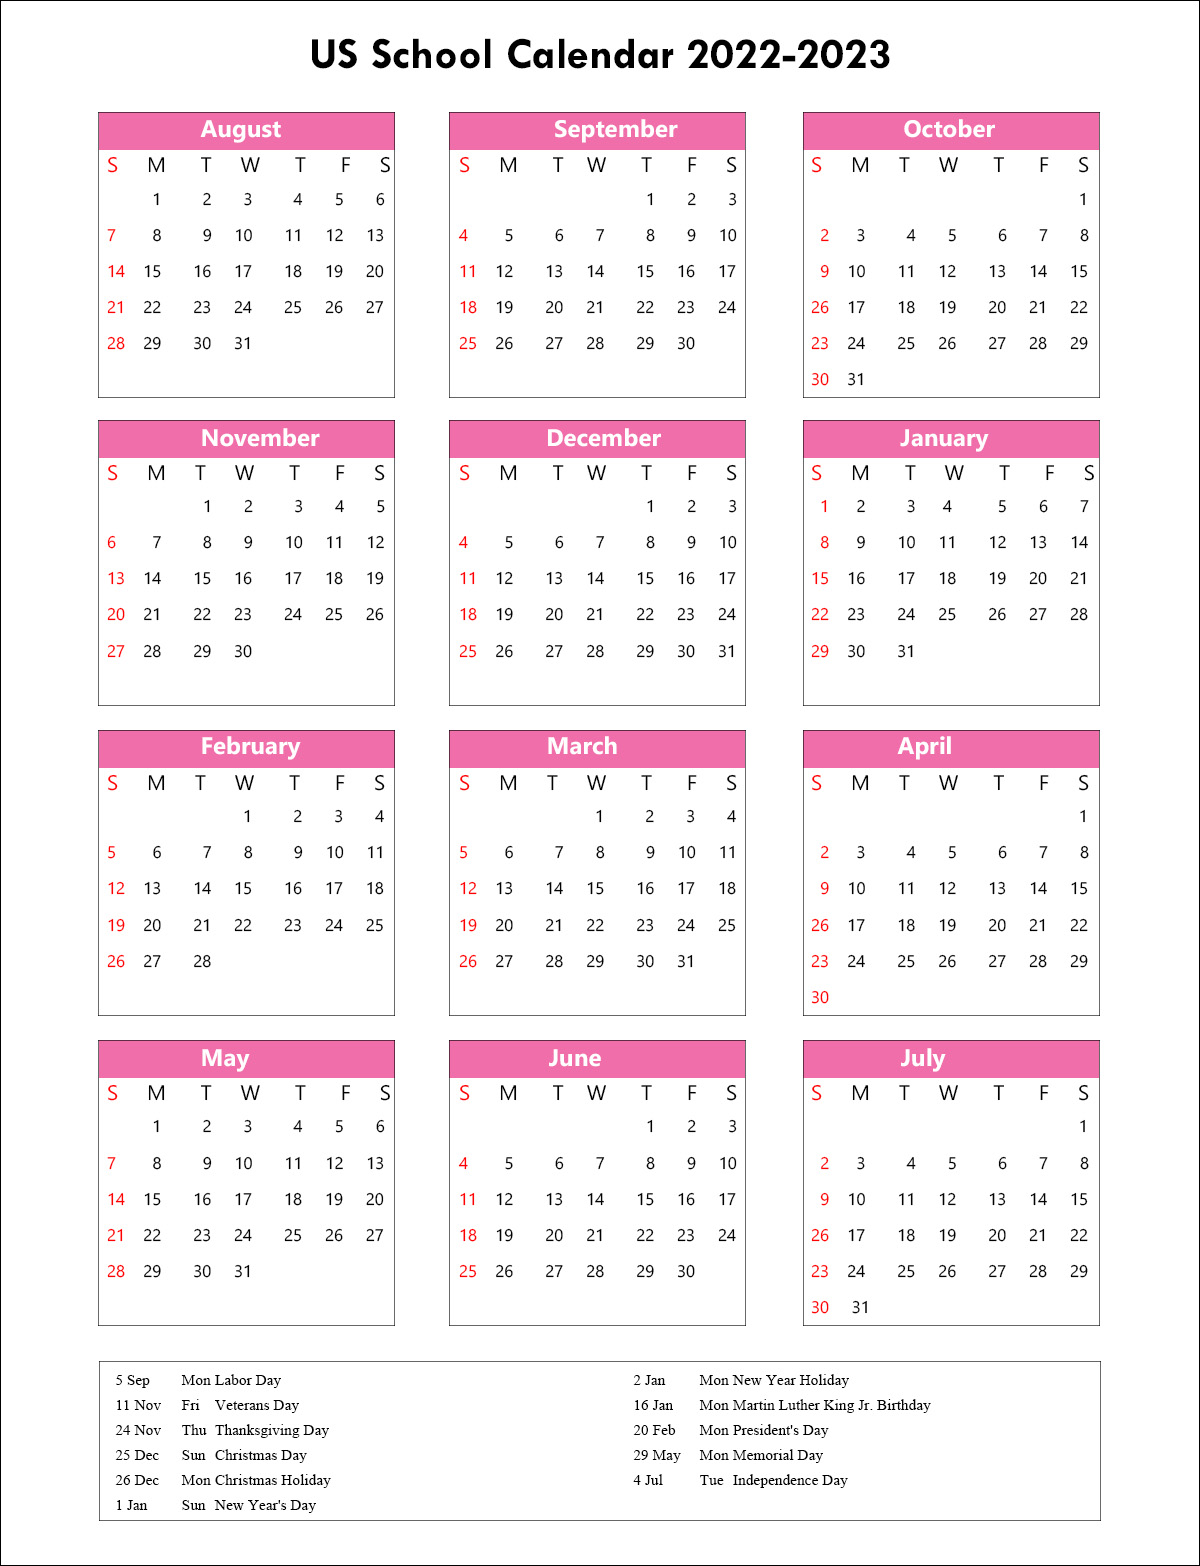 US School Calendar 2023